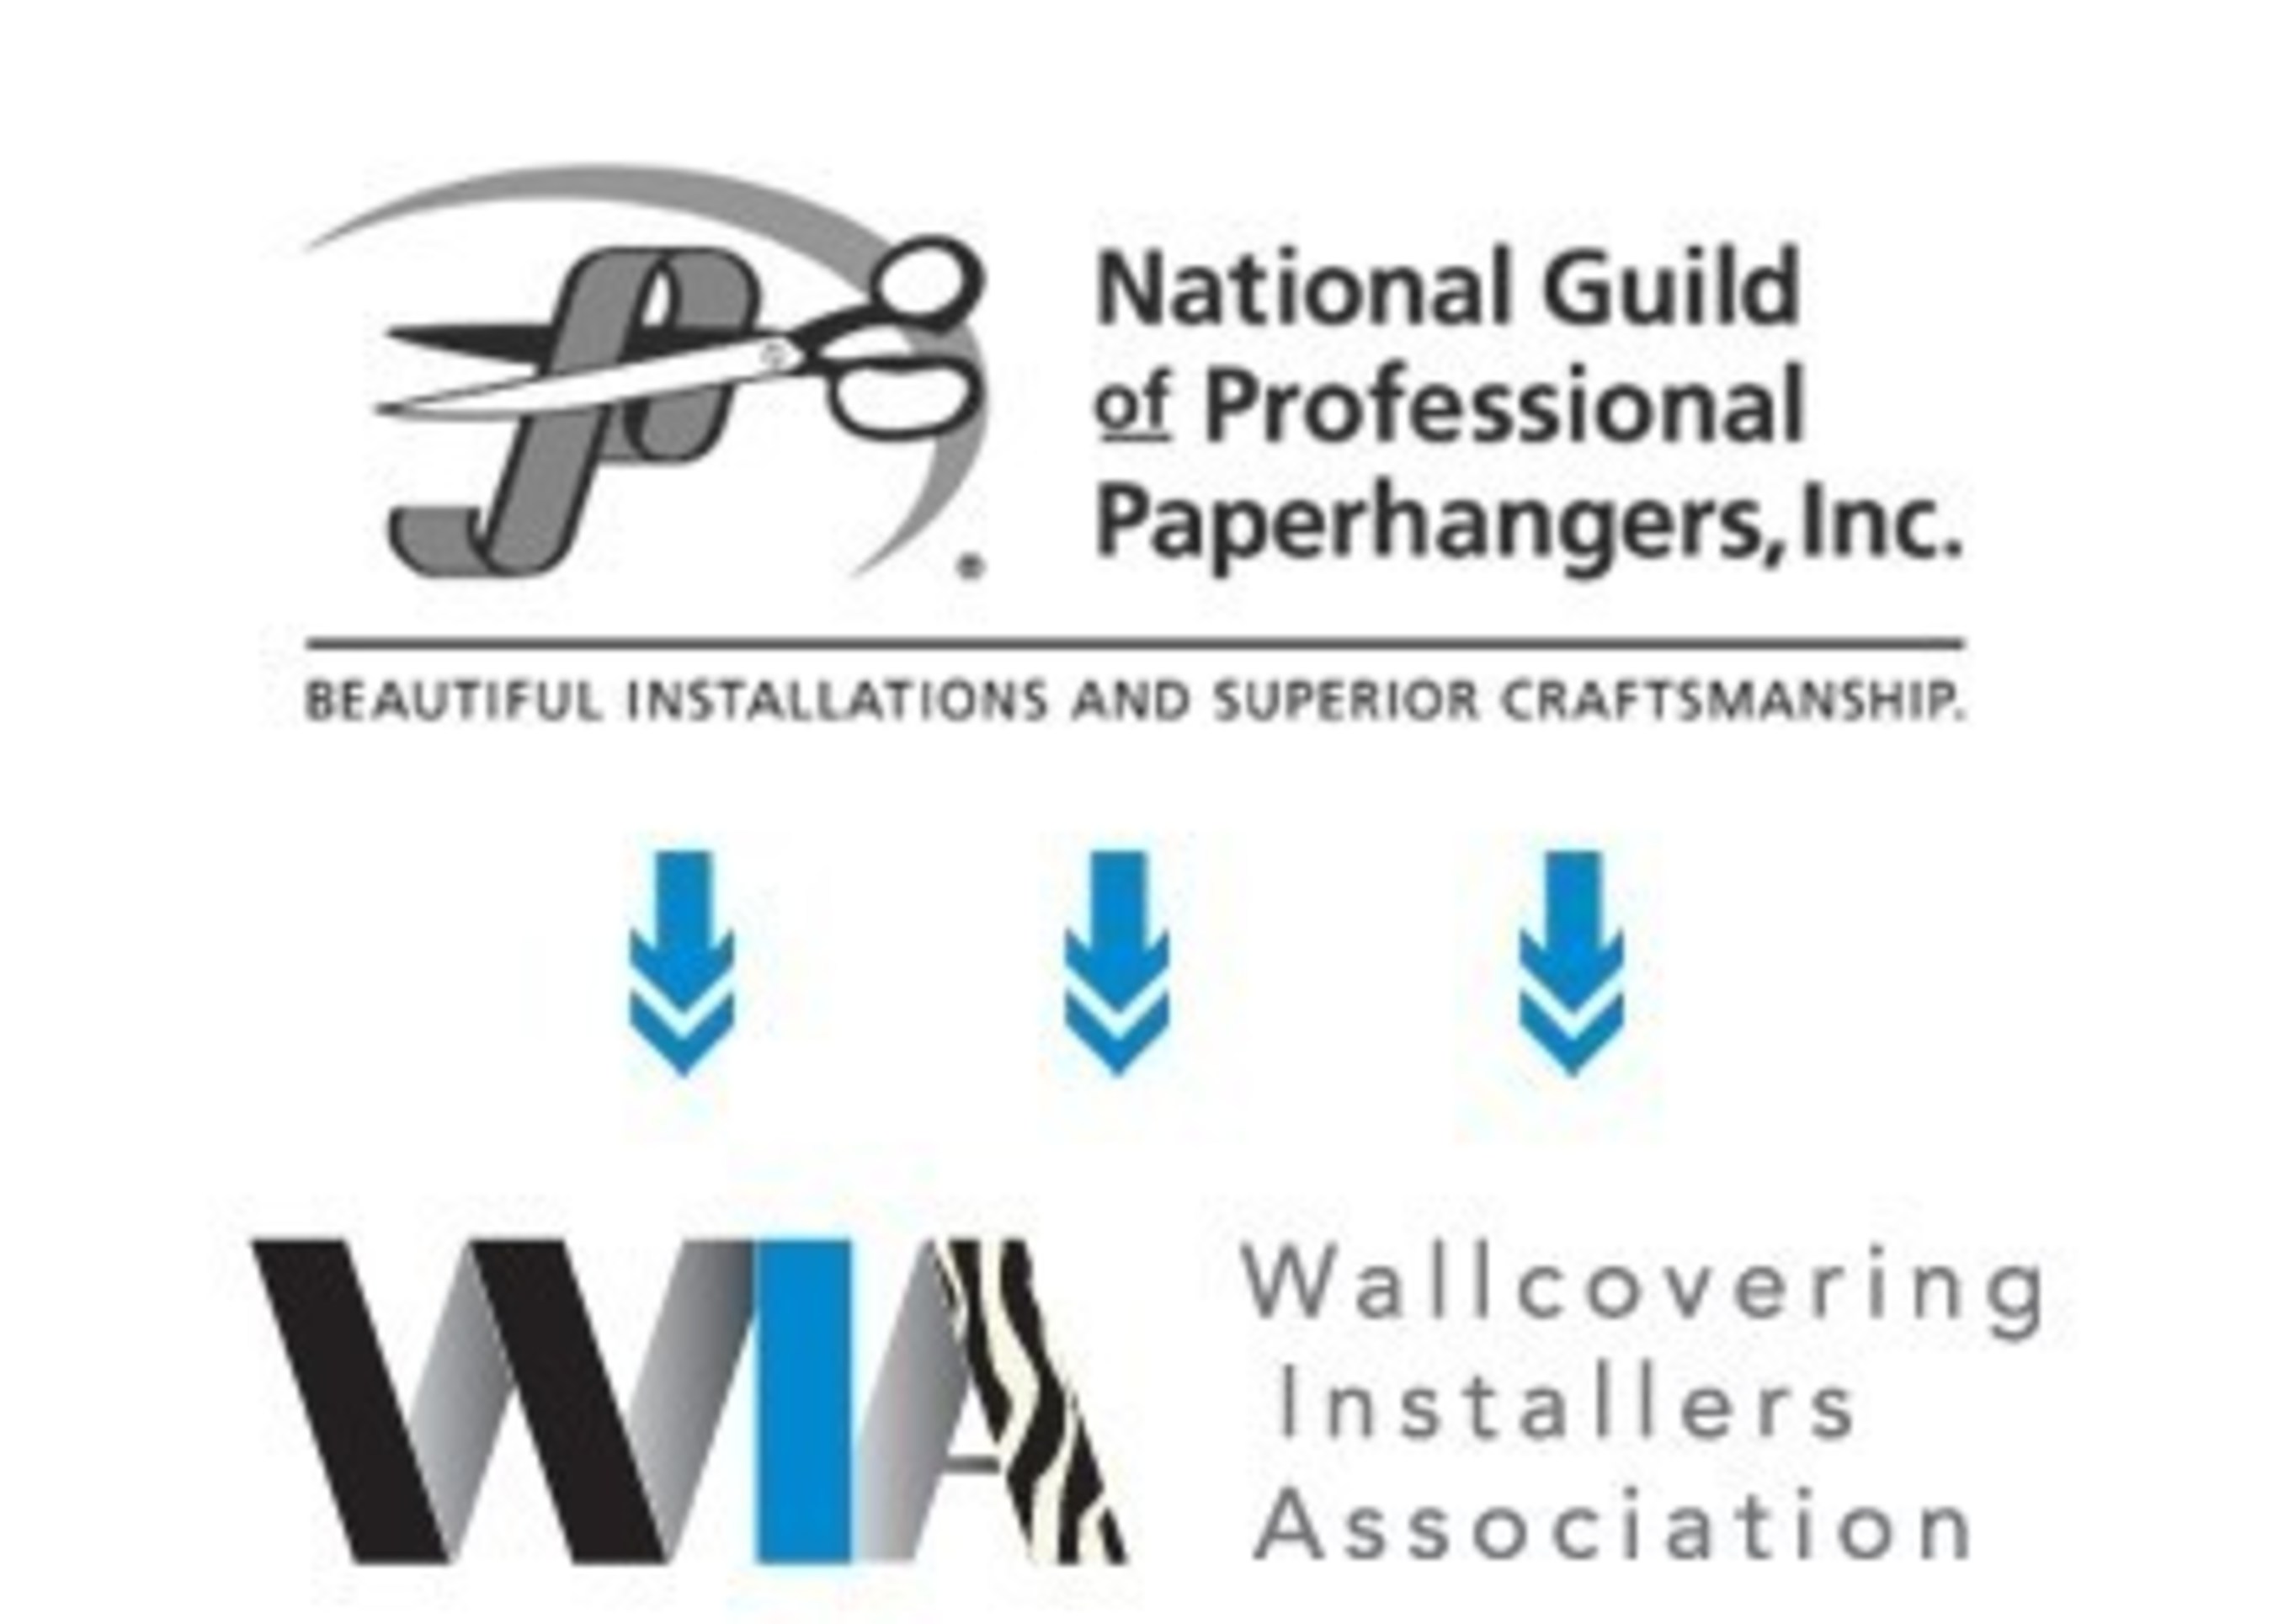 Professional Paperhangers Rebranded